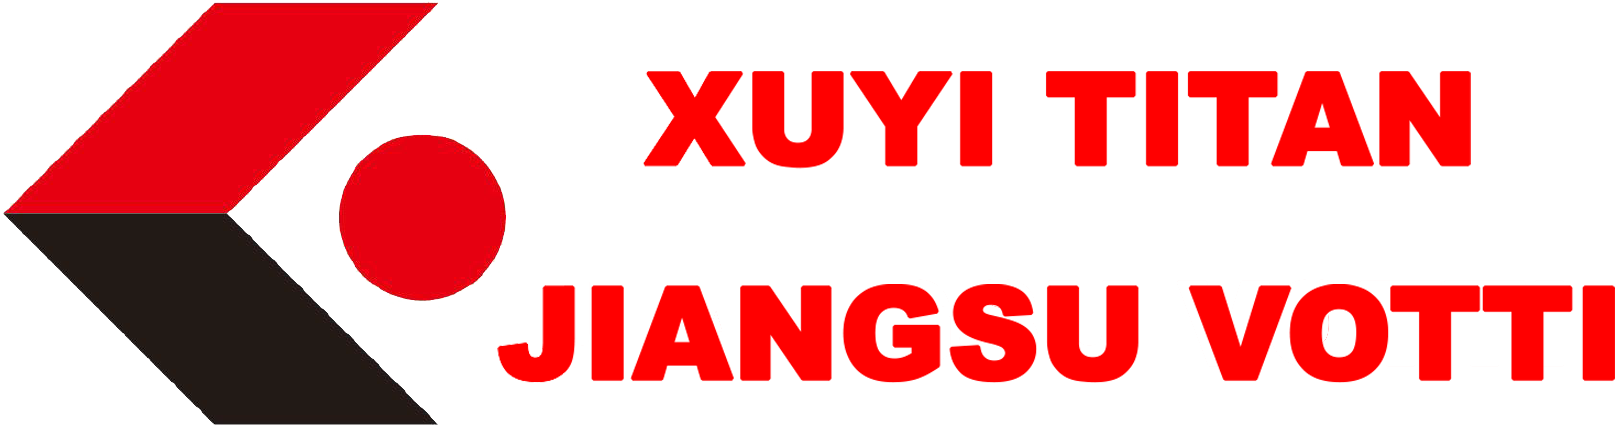 Xuyi Titan & Material Co.,Ltd / Jiangsu Votti Non-ferrous Metal Co.,Ltd